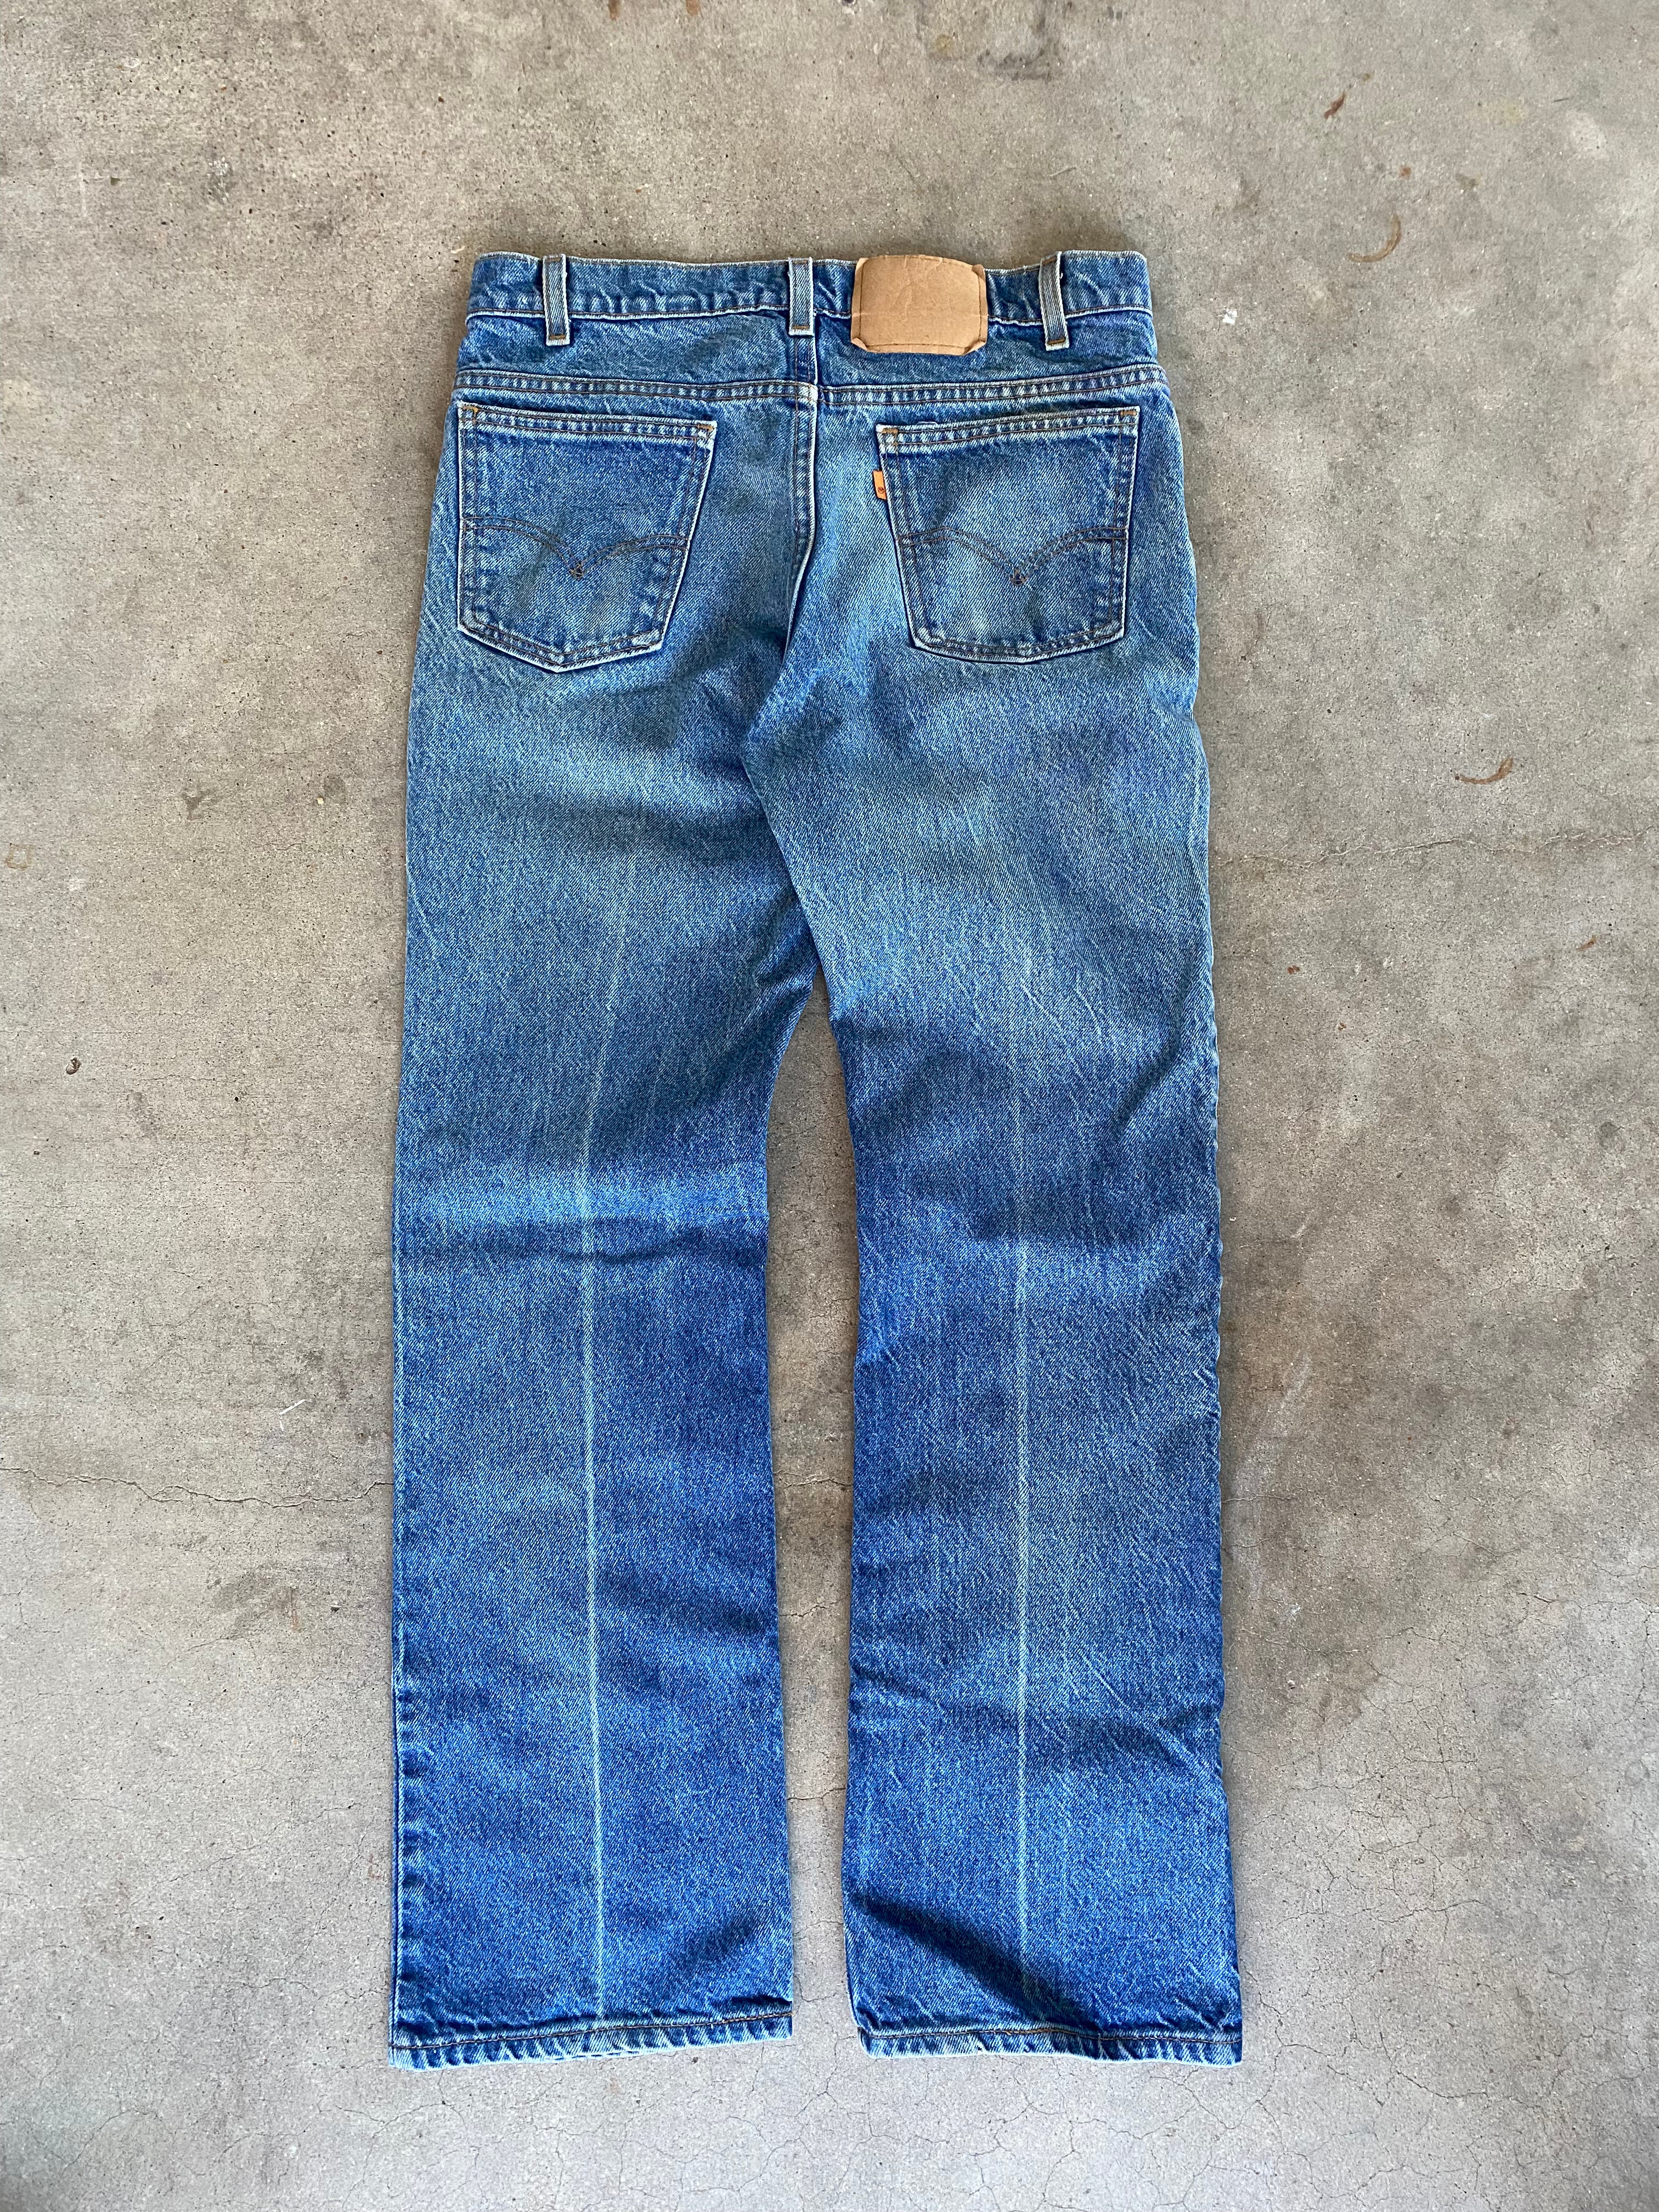 1996 Levi’s 517 Orange Tab Bootcut Flare Jeans (33"x30")